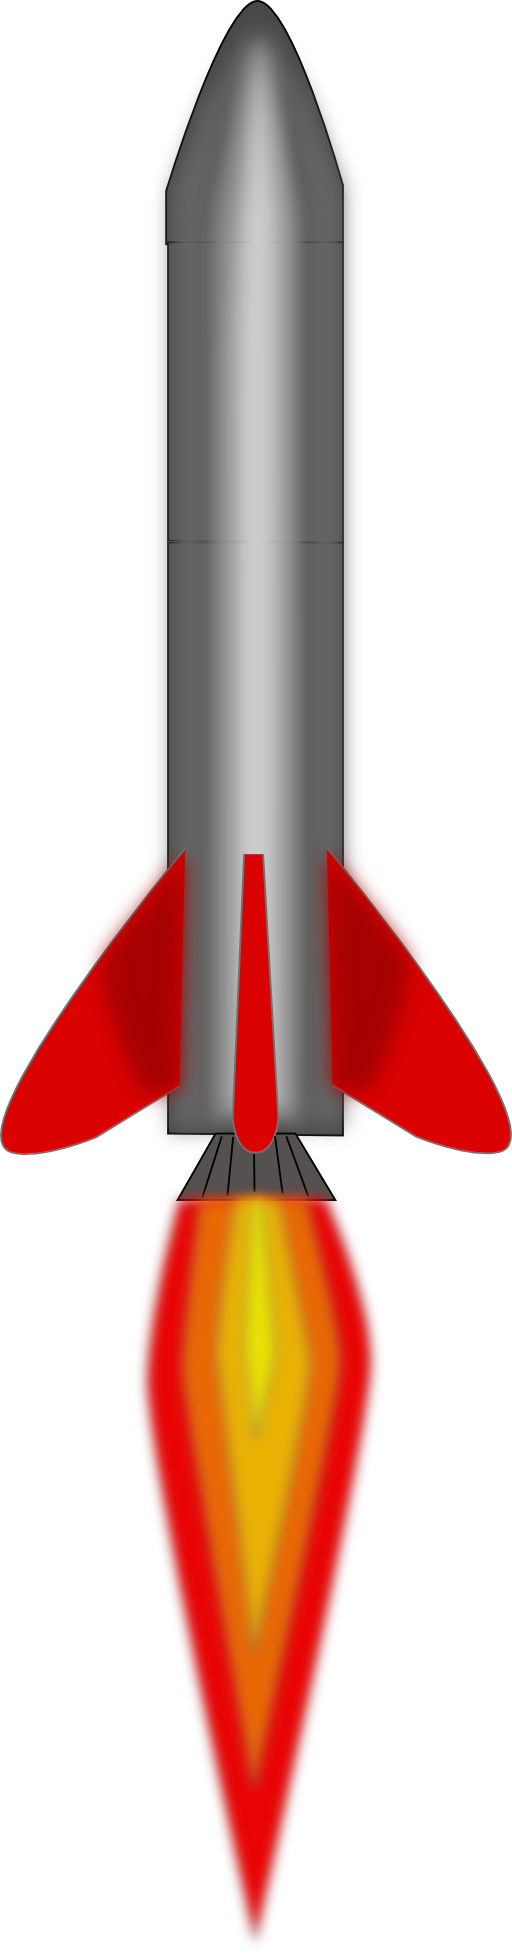 clipart-rocket-512x512-3e8f.png | Clipart Panda - Free Clipart Images